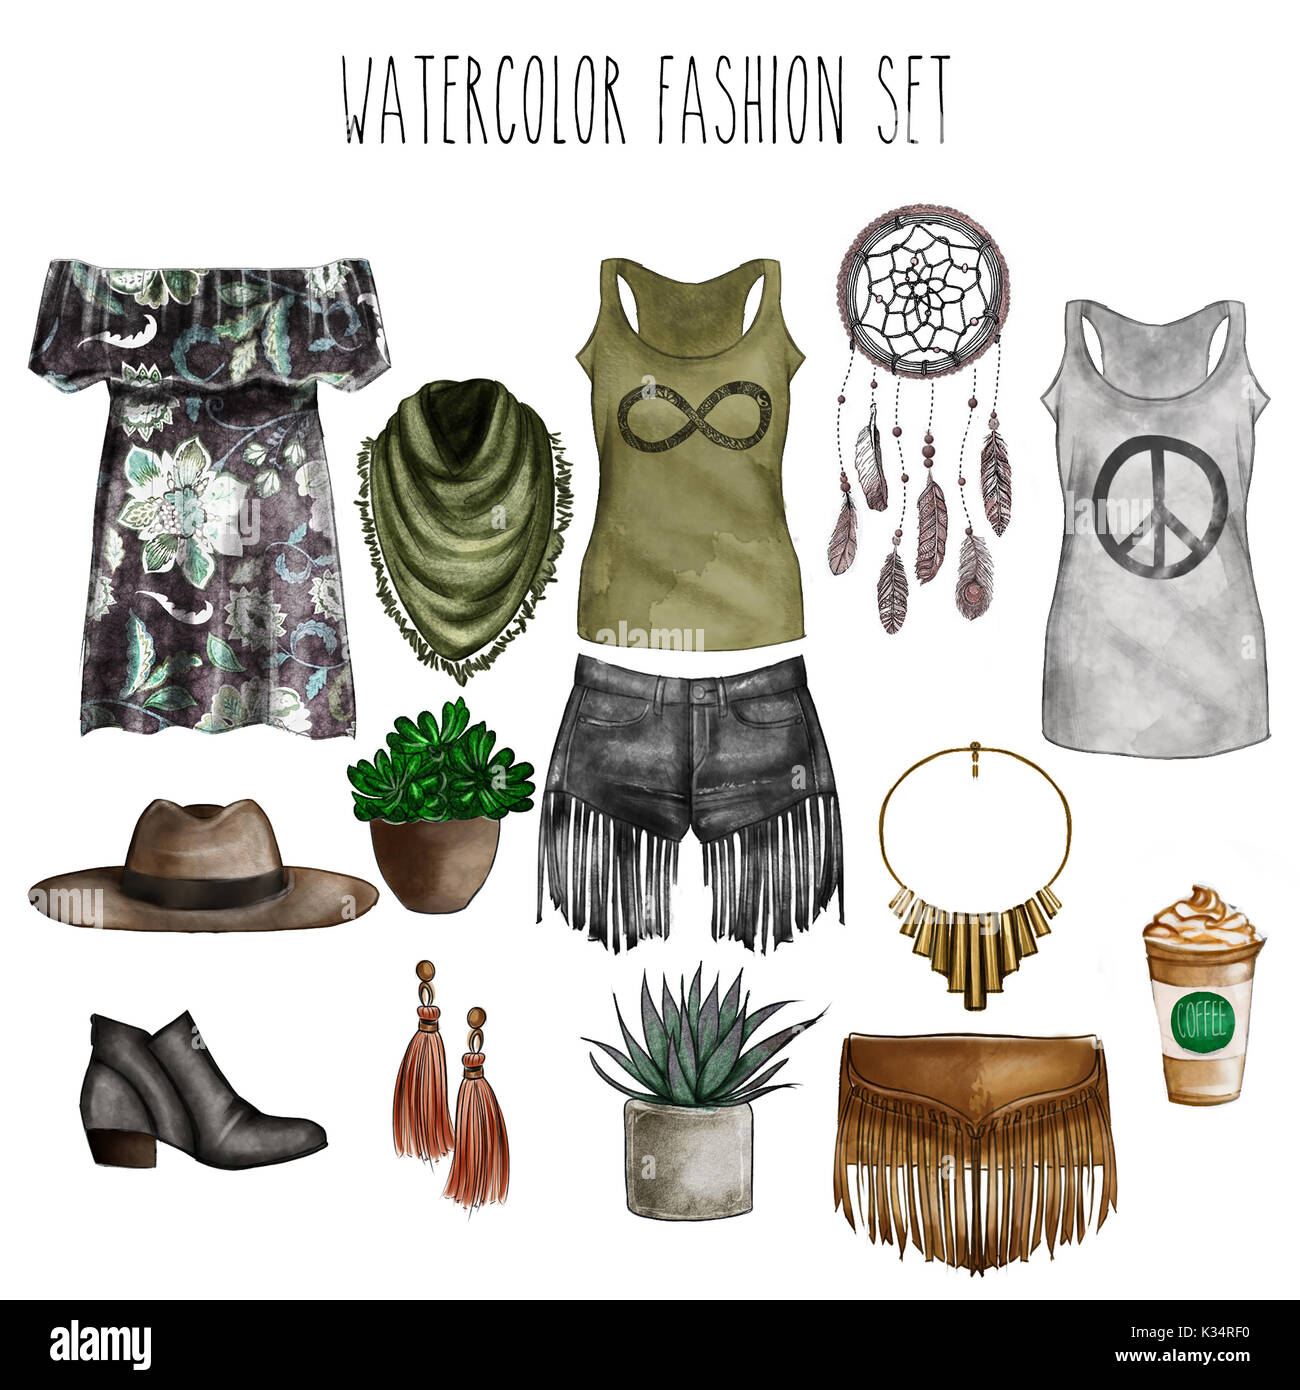 Watercolor Digital Illustration - Watercolor Fashion Clip Art Set - Wardrobe Essentials - Woman Apparel - Flat Fashion Sketch Stock Photo - Alamy